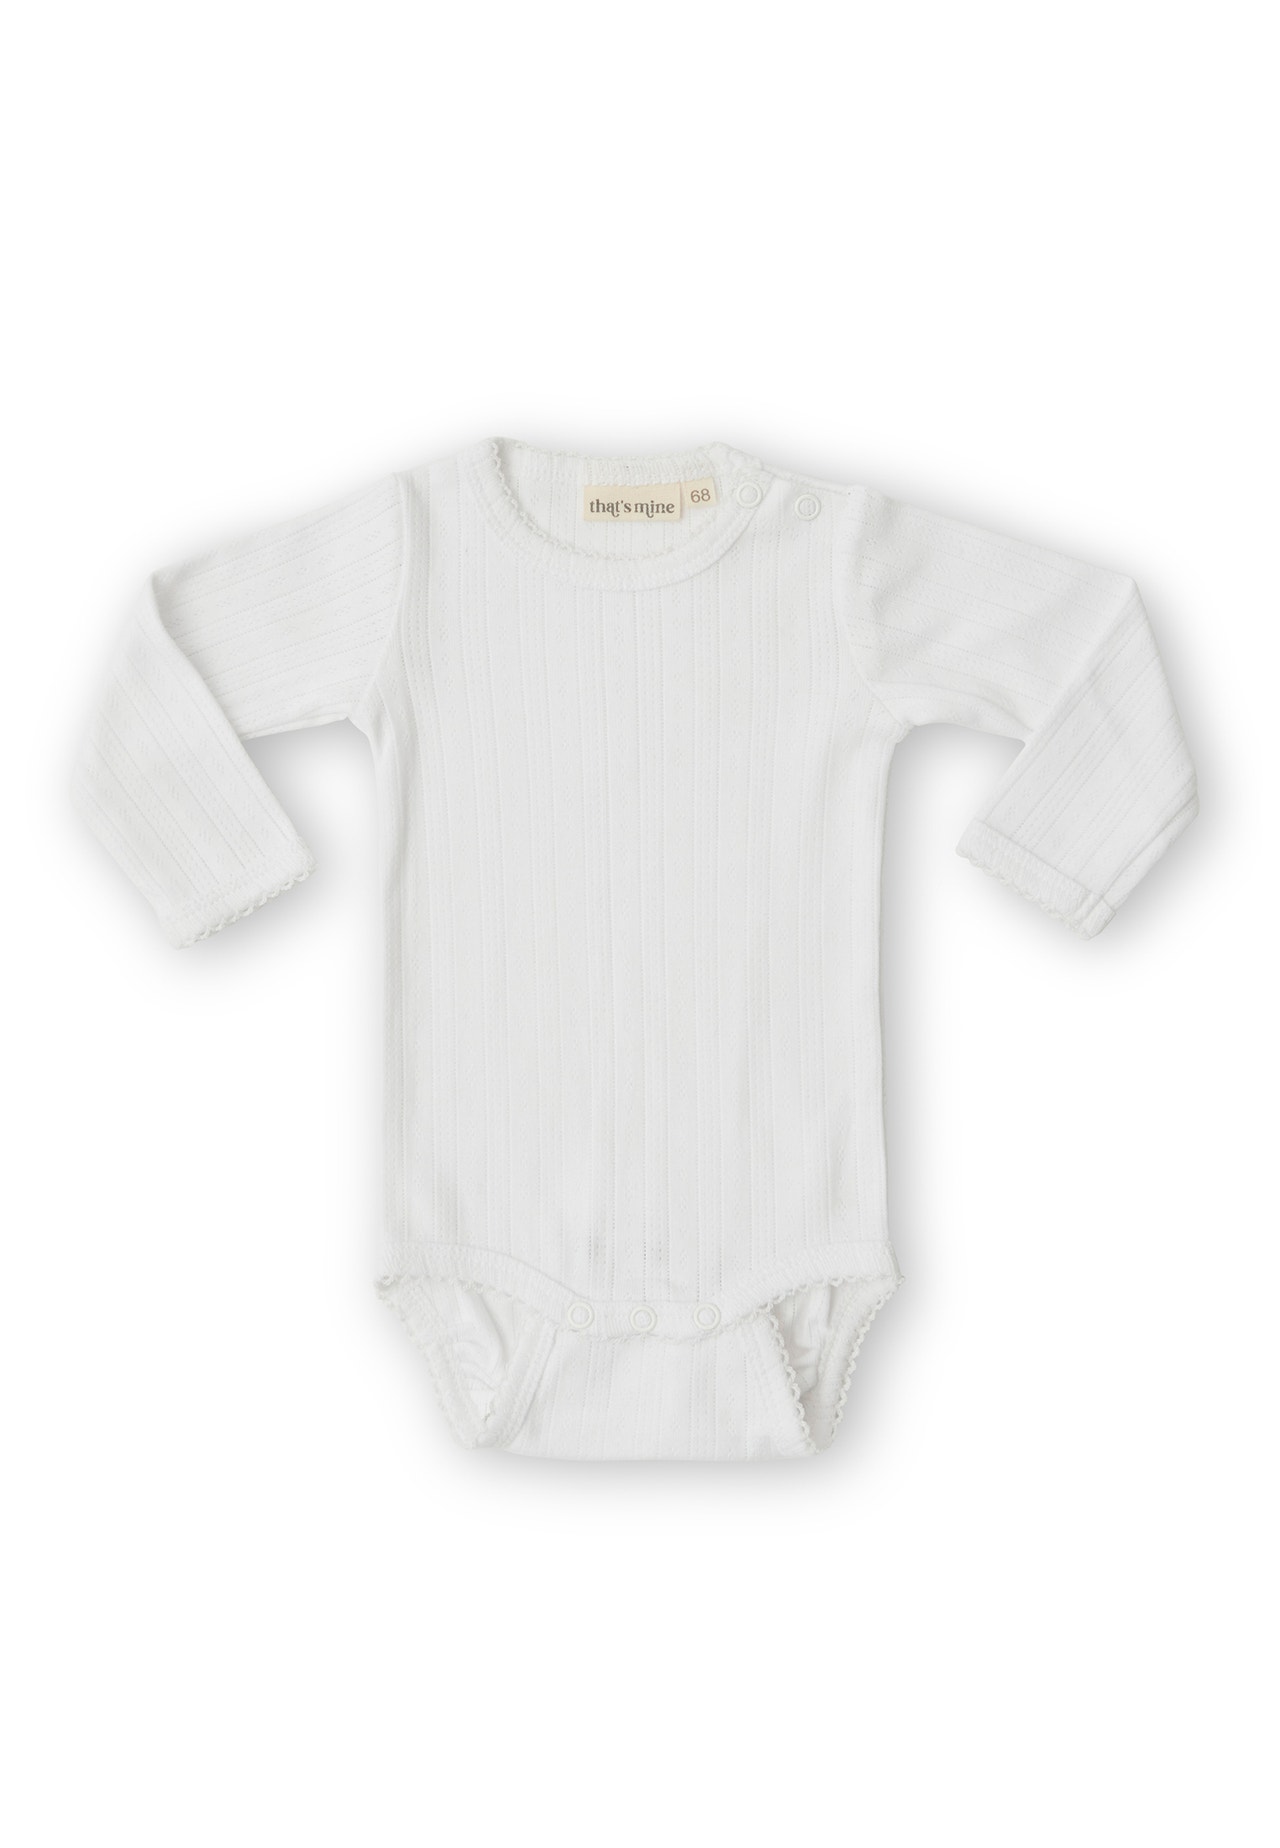 MAMA.LICIOUS Baby-romper -Antique White - 88888864